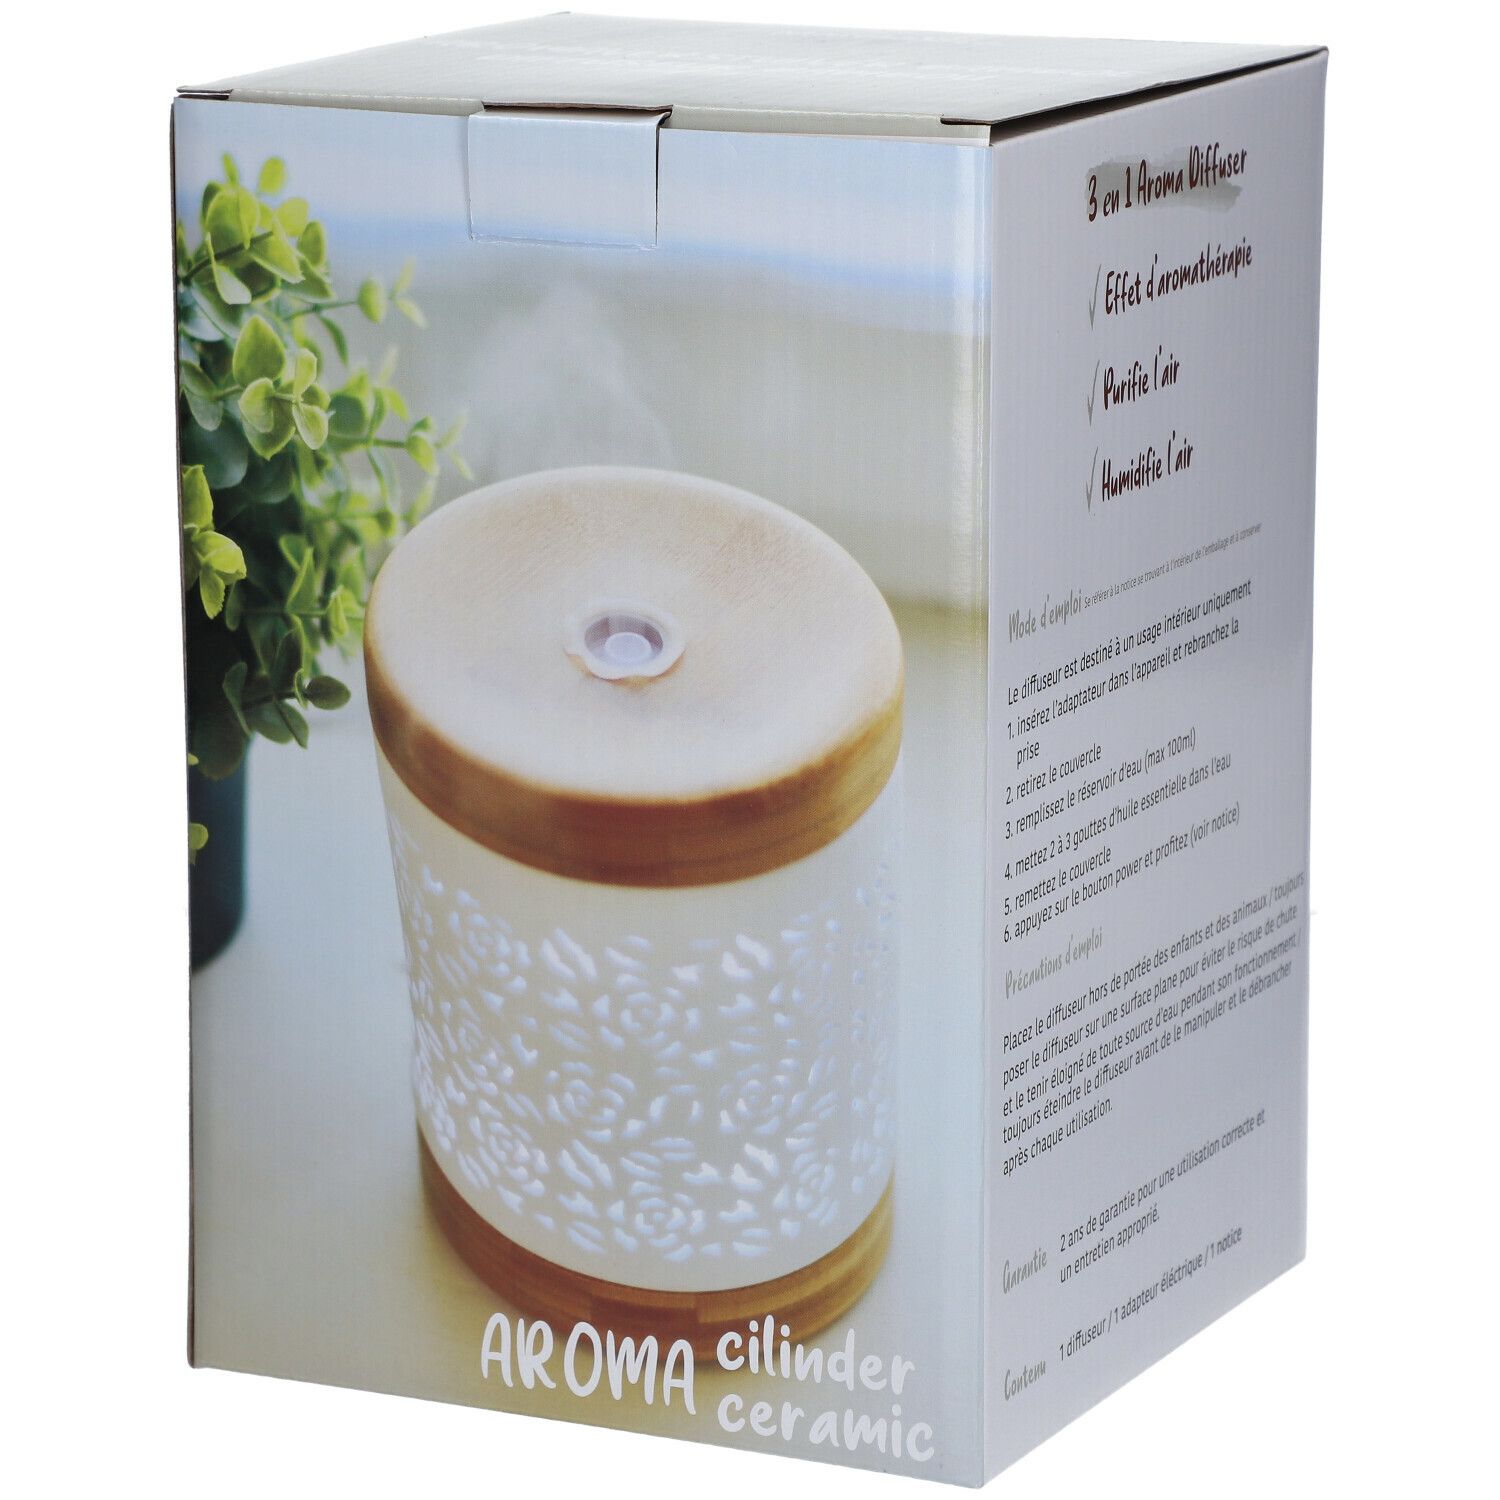 Mannavital Aroma cilinder ceramic